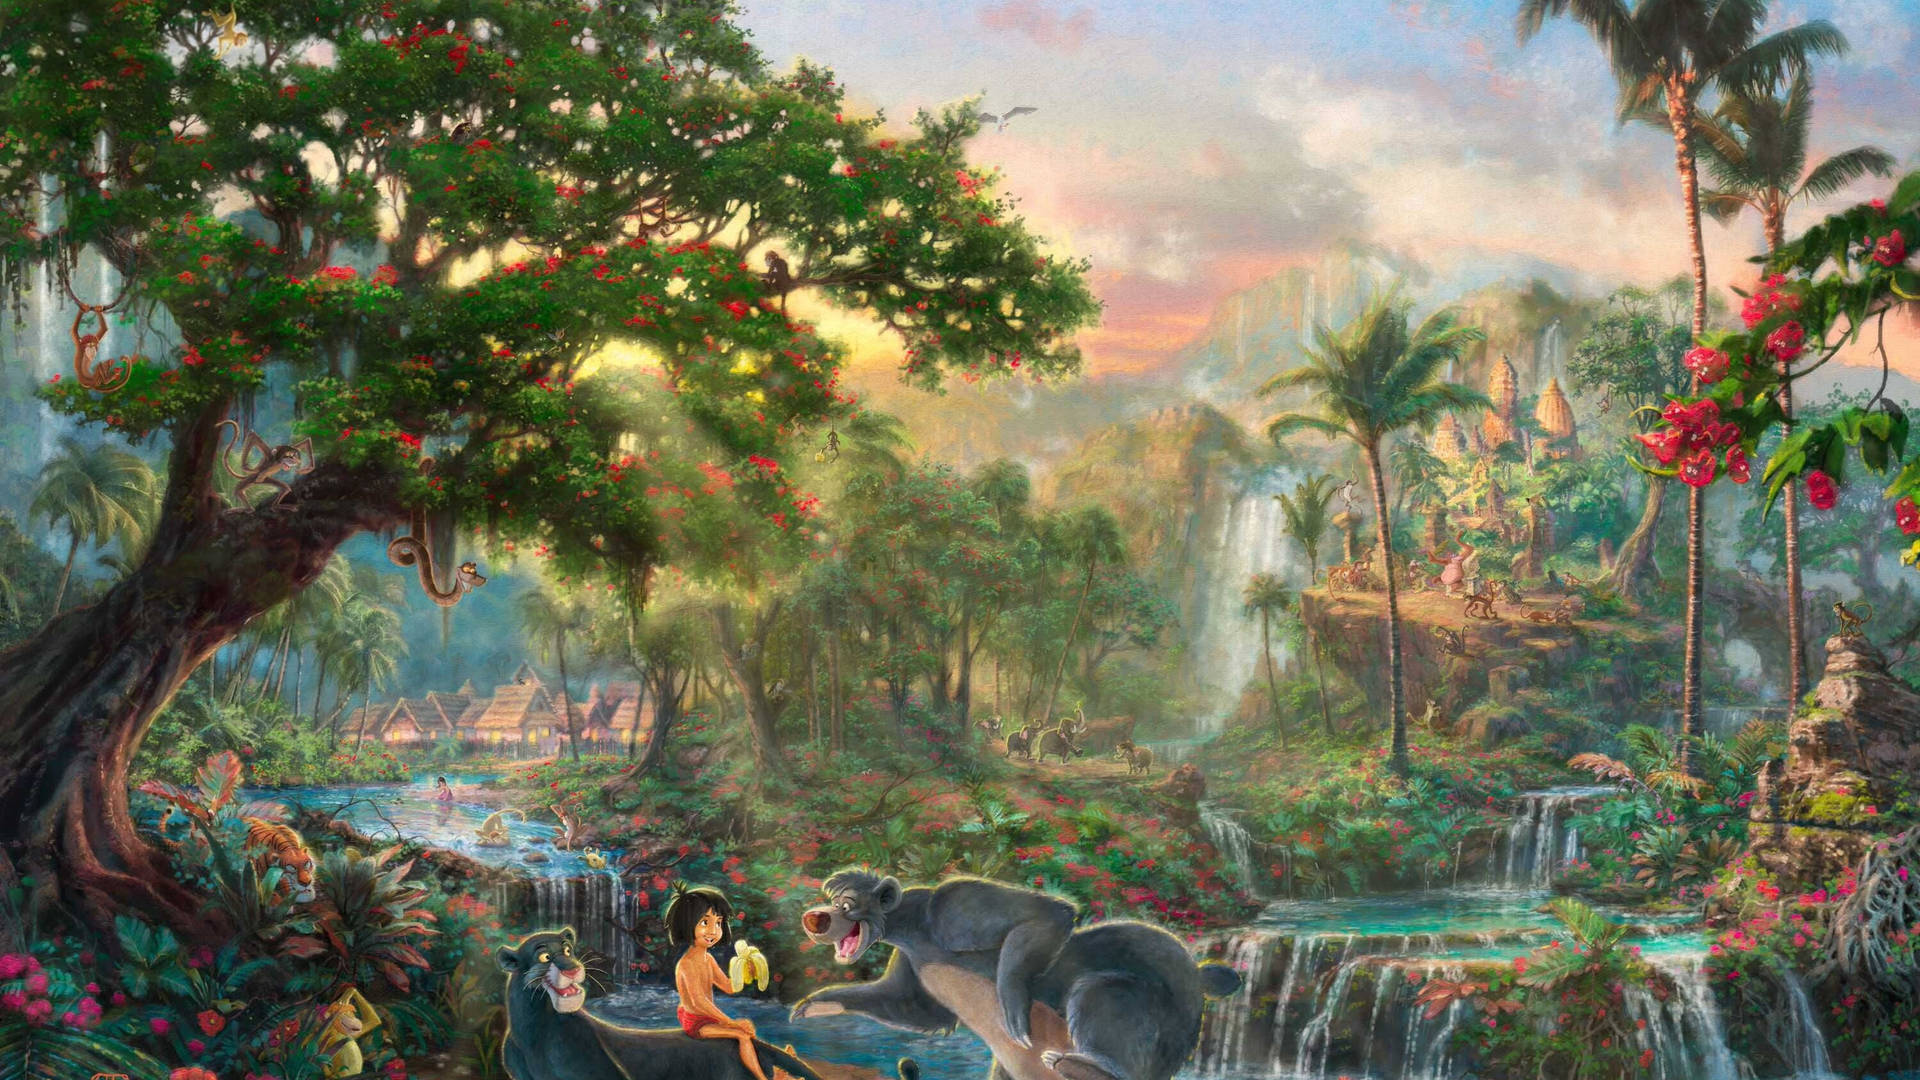 2560x1440 Disney The Jungle Book Wallpaper